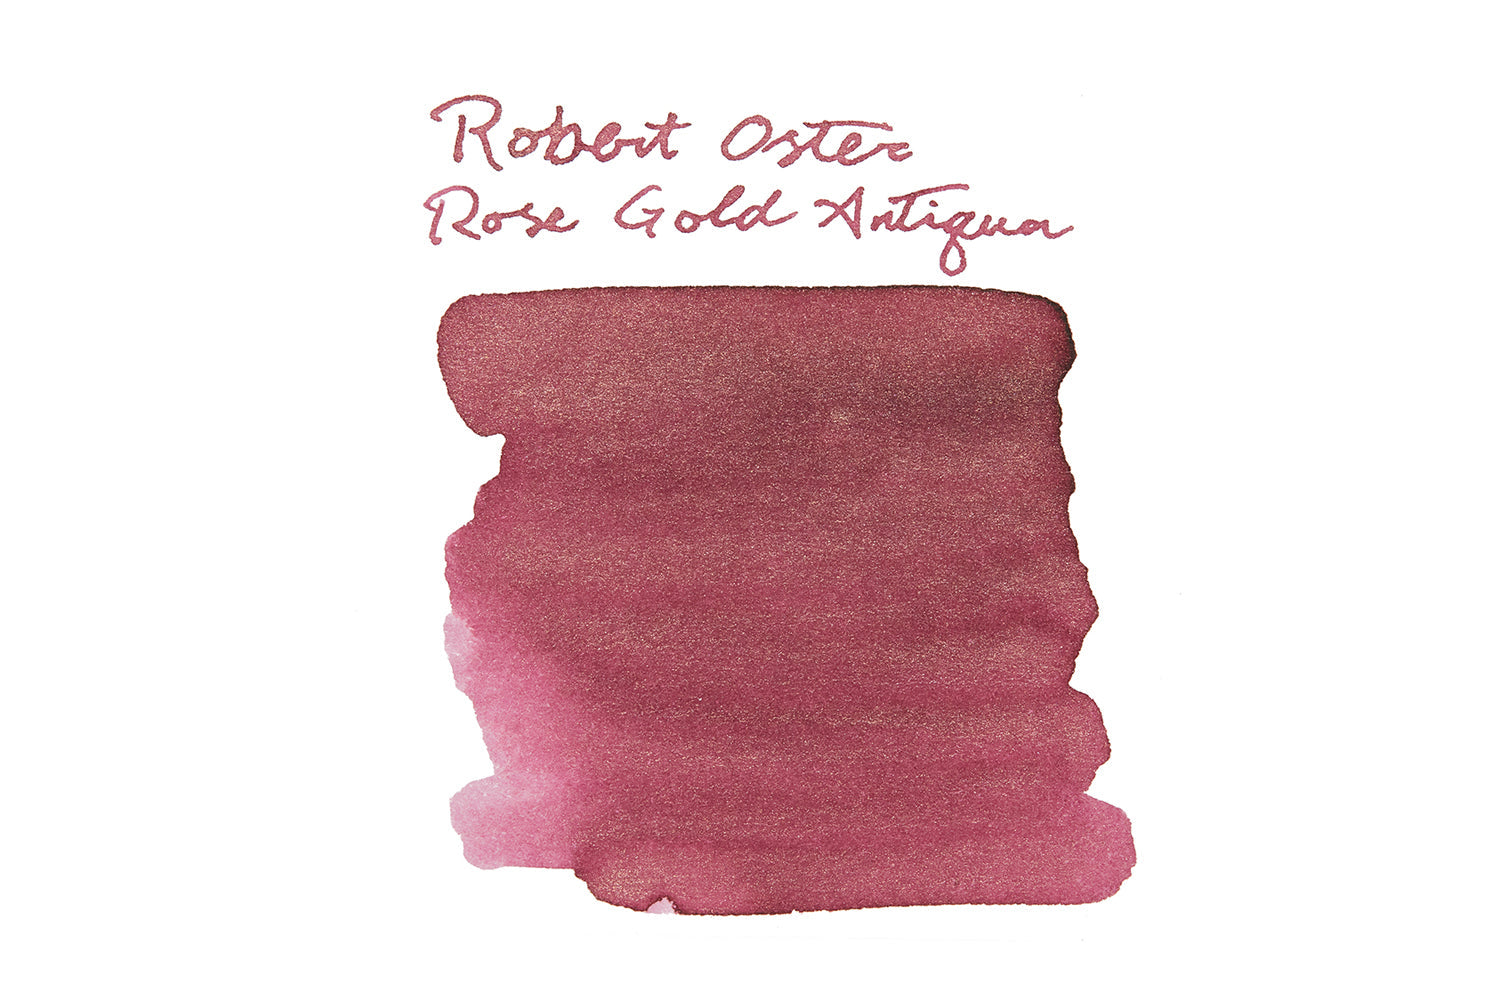 ink review : Robert Oster Gold Antiqua – inkxplorations